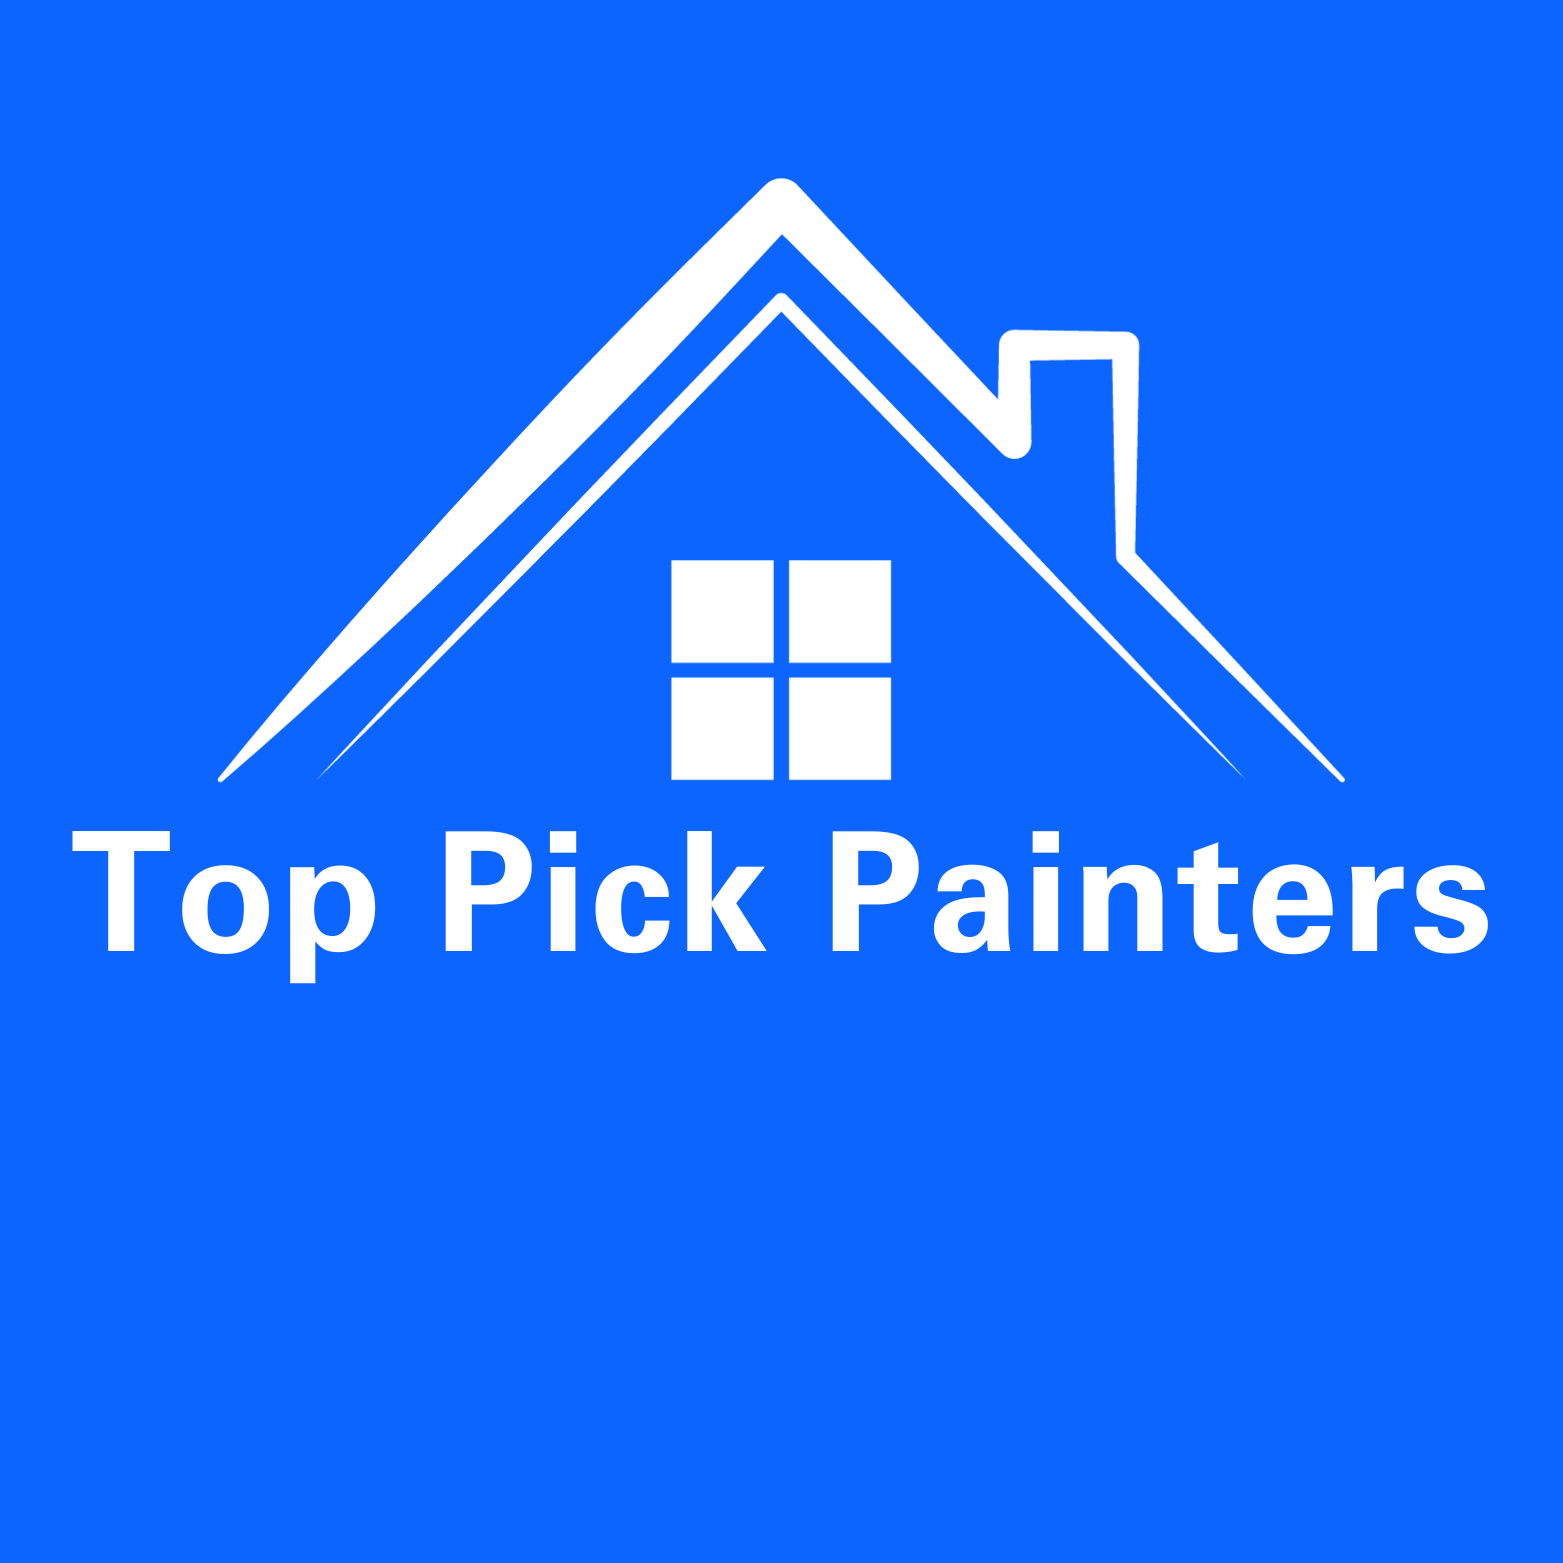 Top Pick Painters's logo